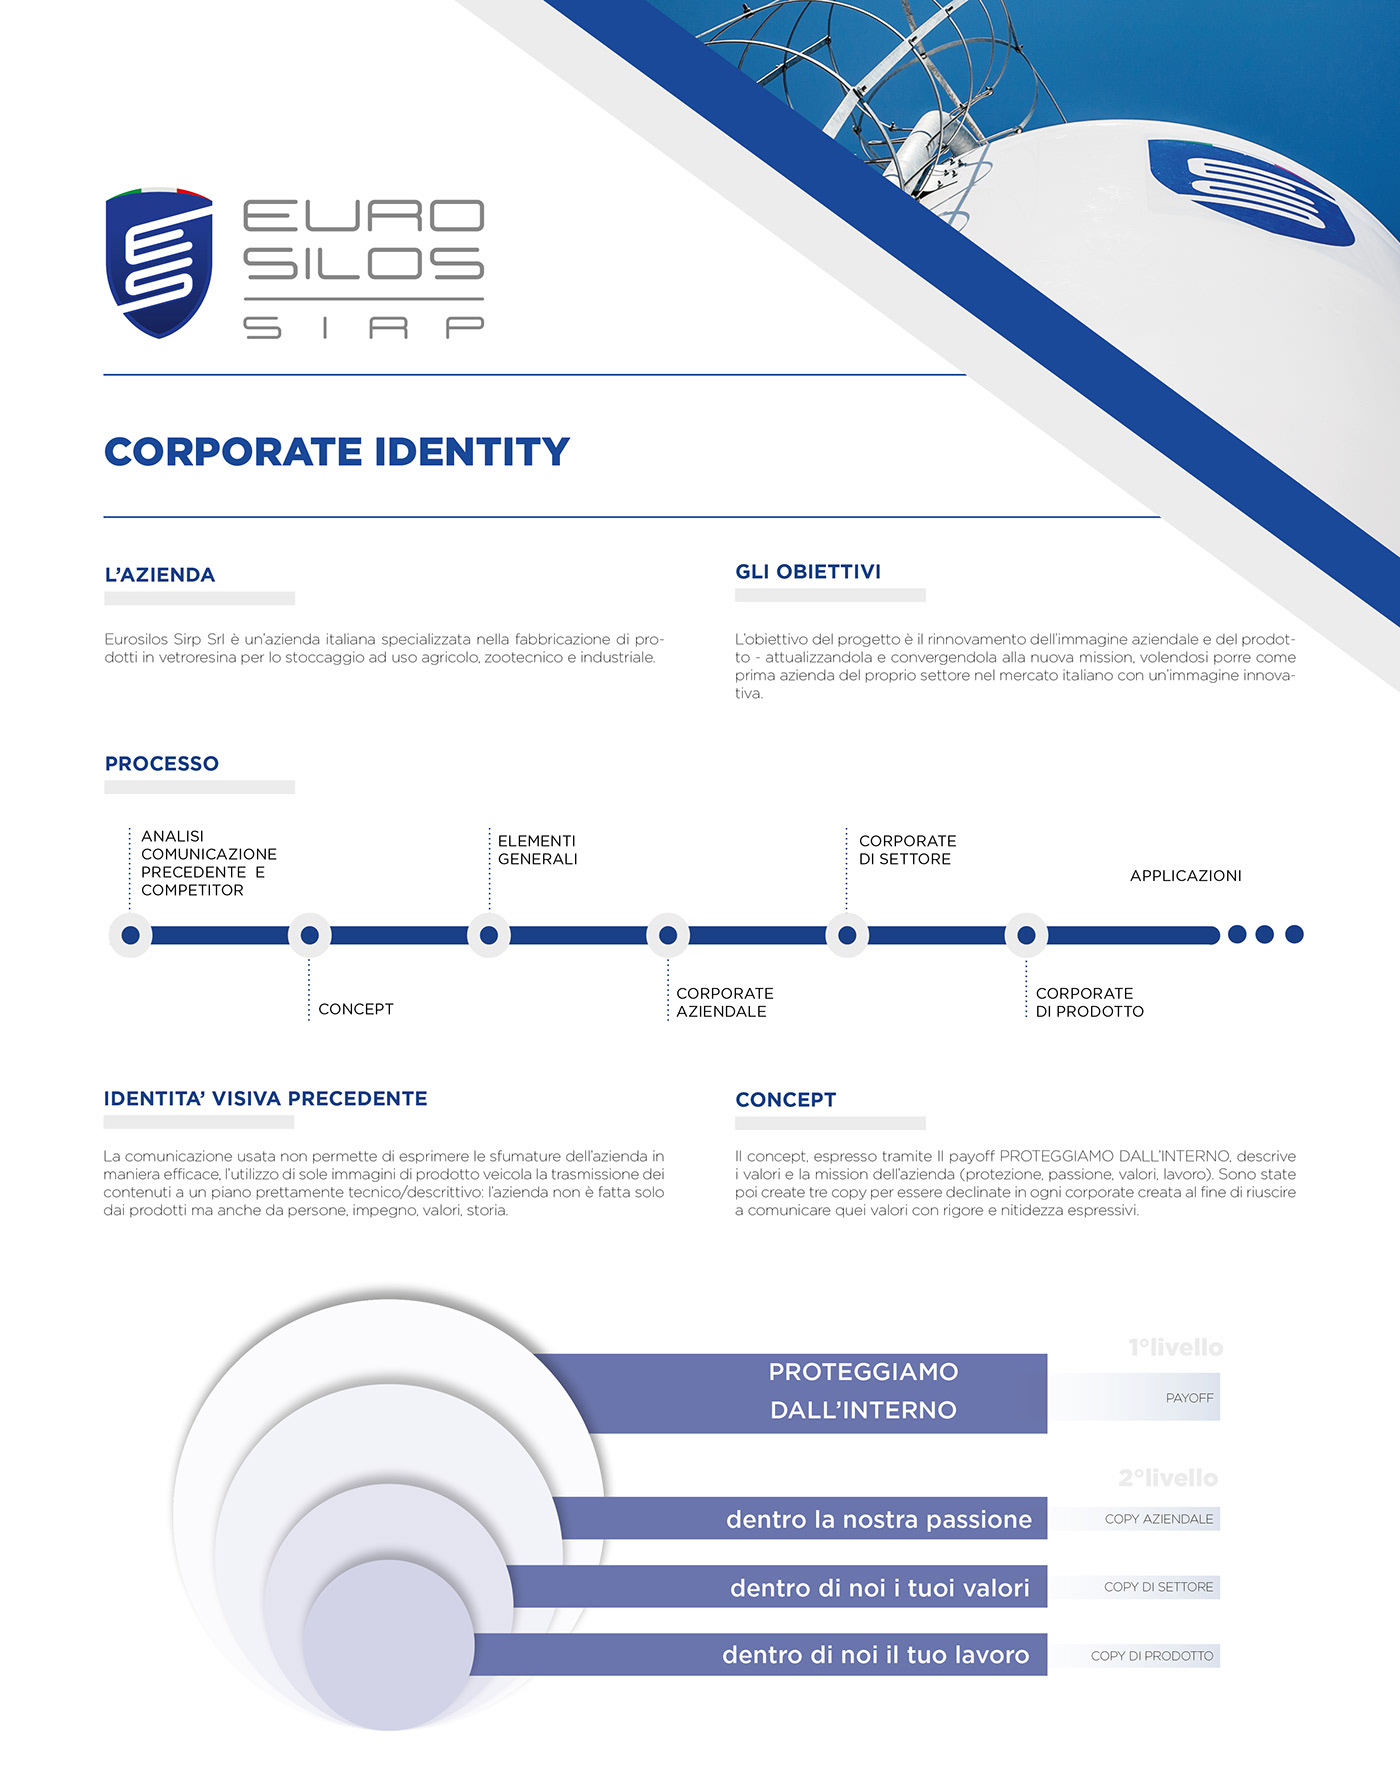 brand identity branding  Corporate Identity icon design  identity Identity redesign Rebrand editorial graphic infographic